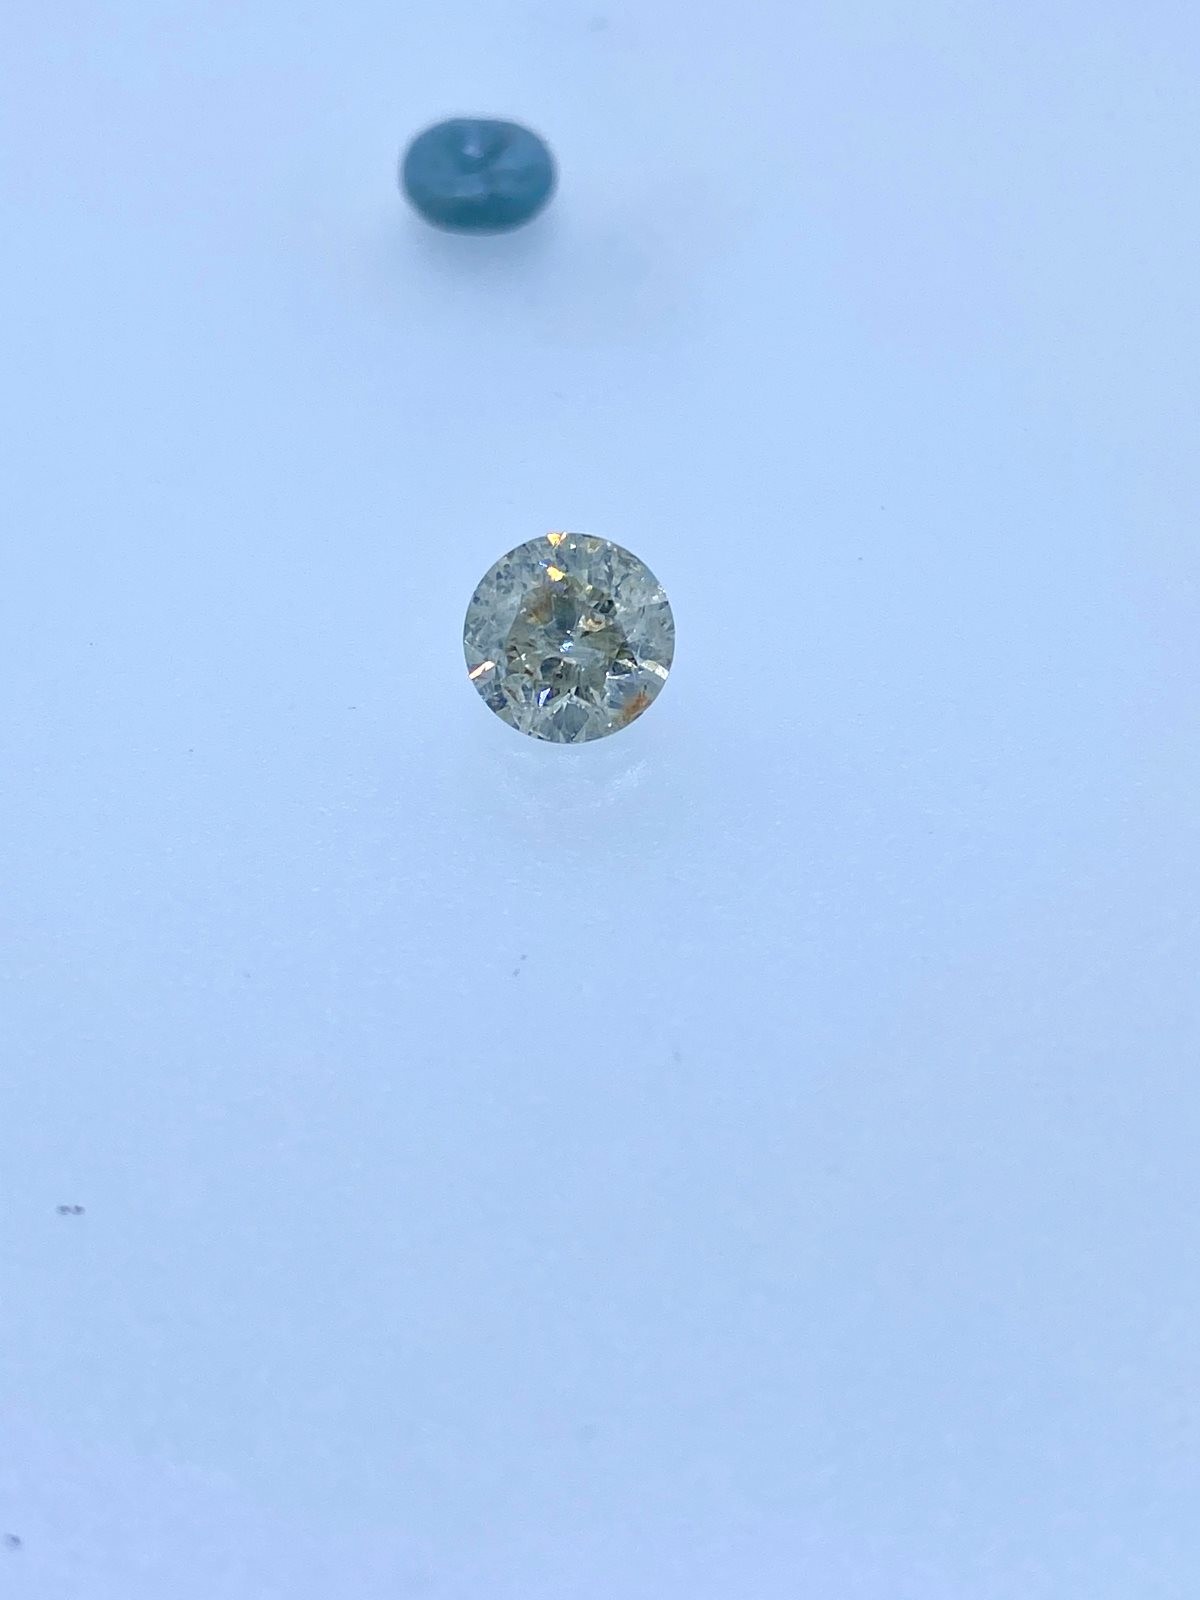 White Salt N Pepper Round Diamond - 1.54 carats